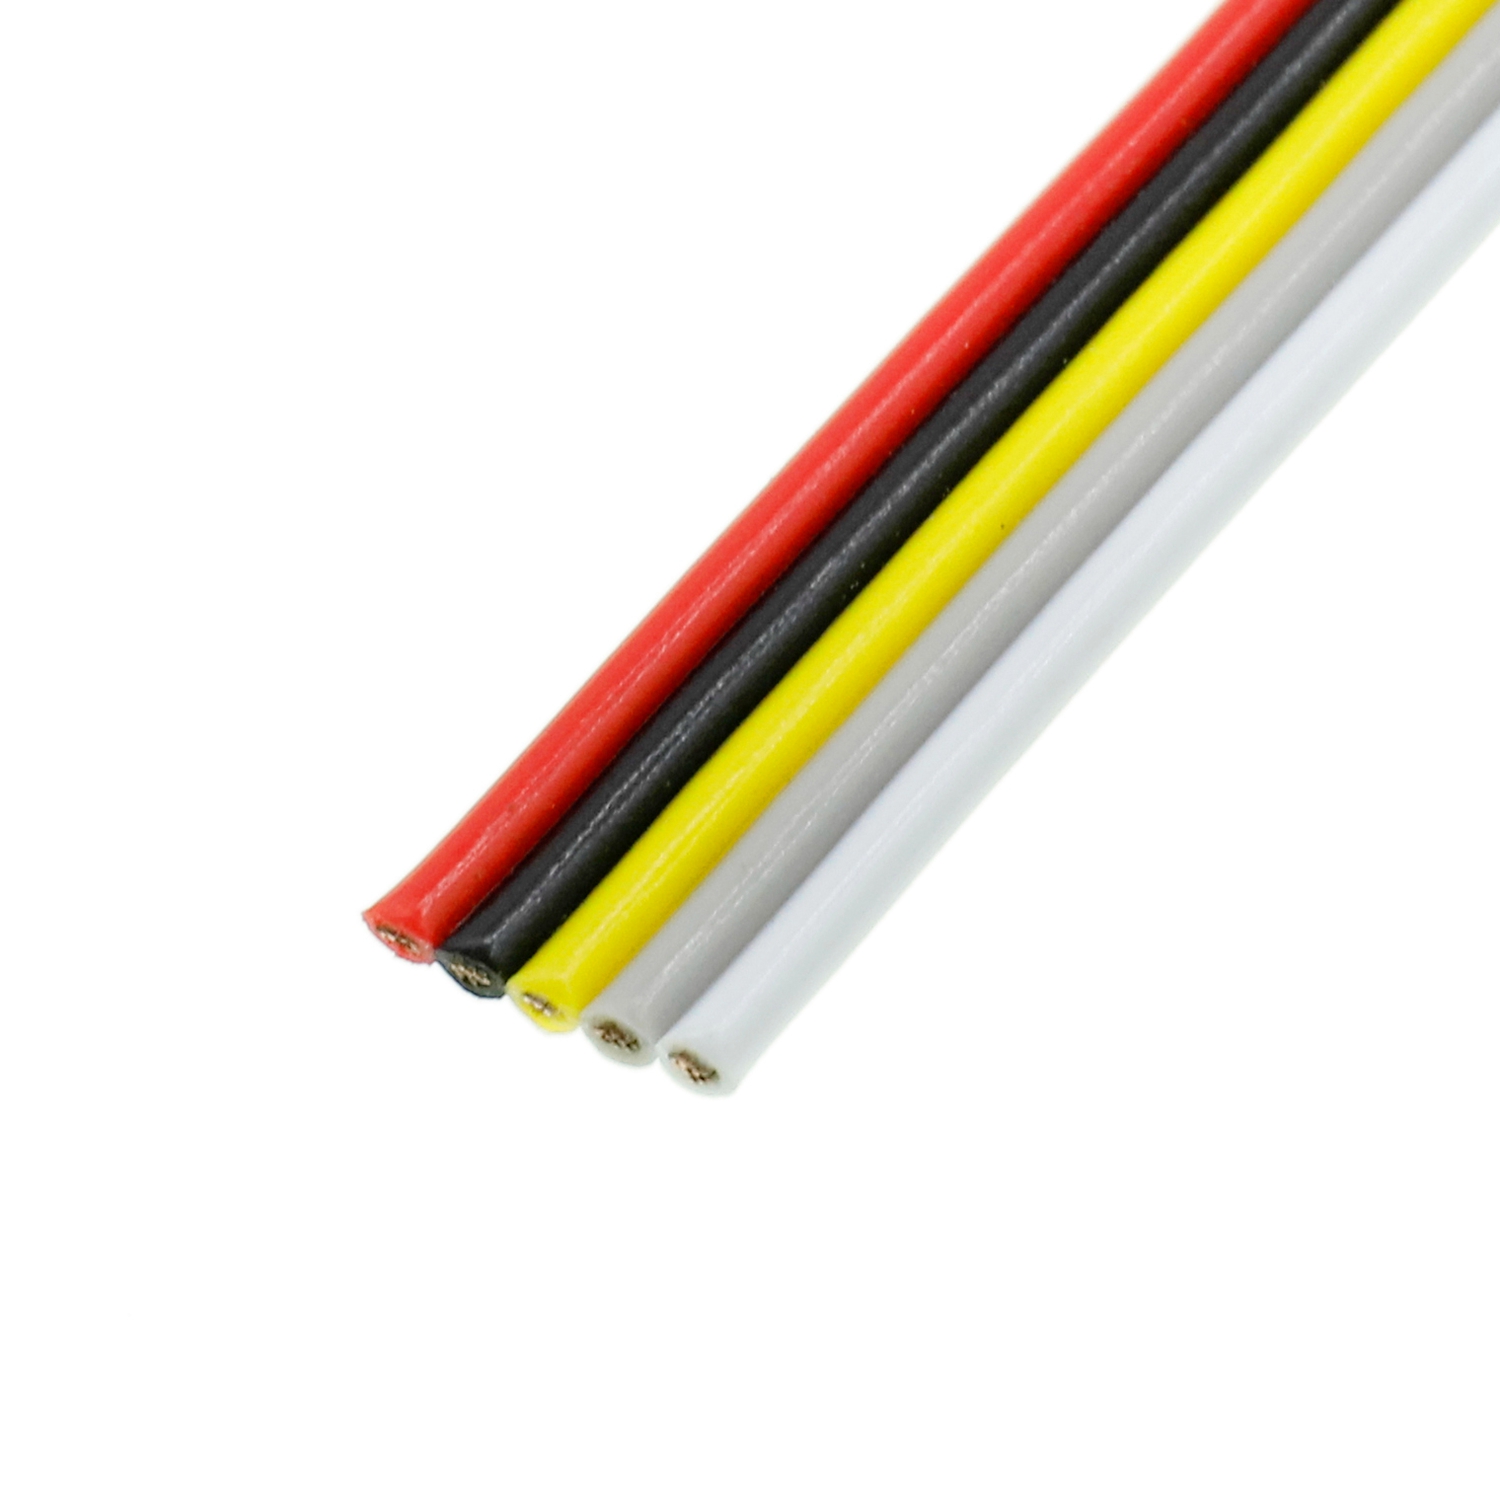 Cable plano de PVC personalizado UL1571 24AWG 5Core Lighting